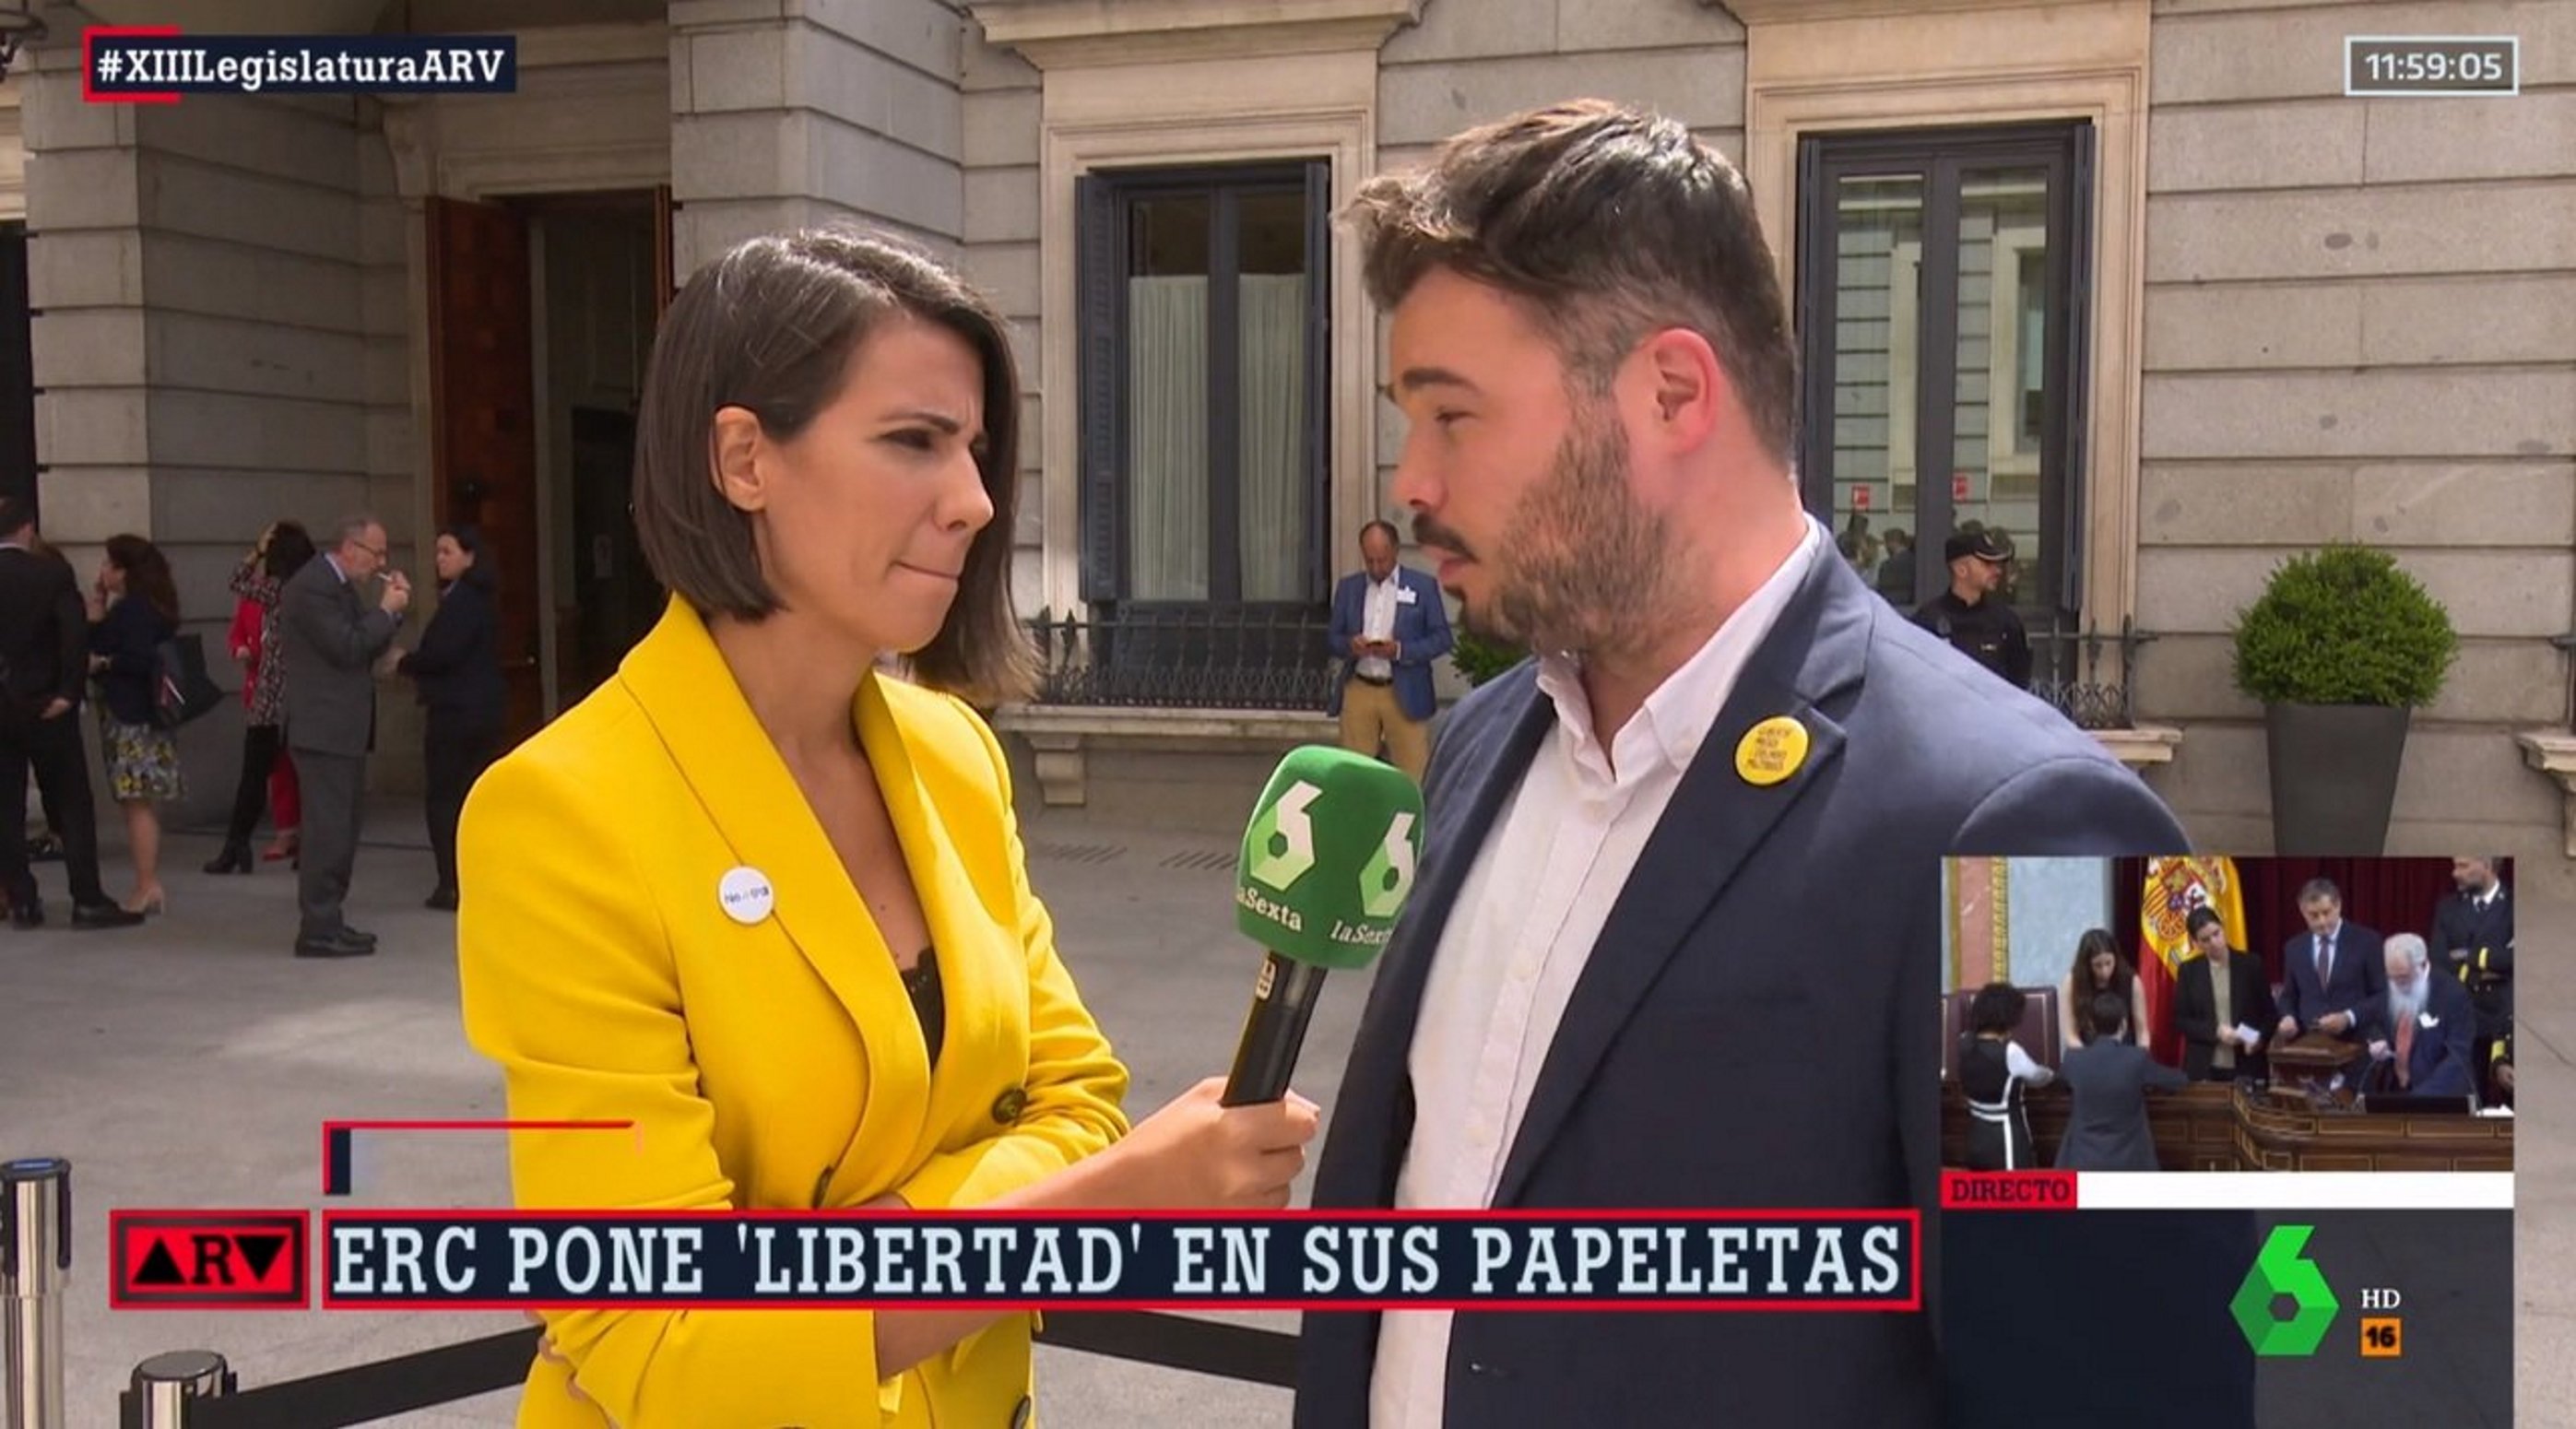 Ana Pastor, lapidada por ir de amarillo al Congreso: "Imbécil, mamporrera, indepe"